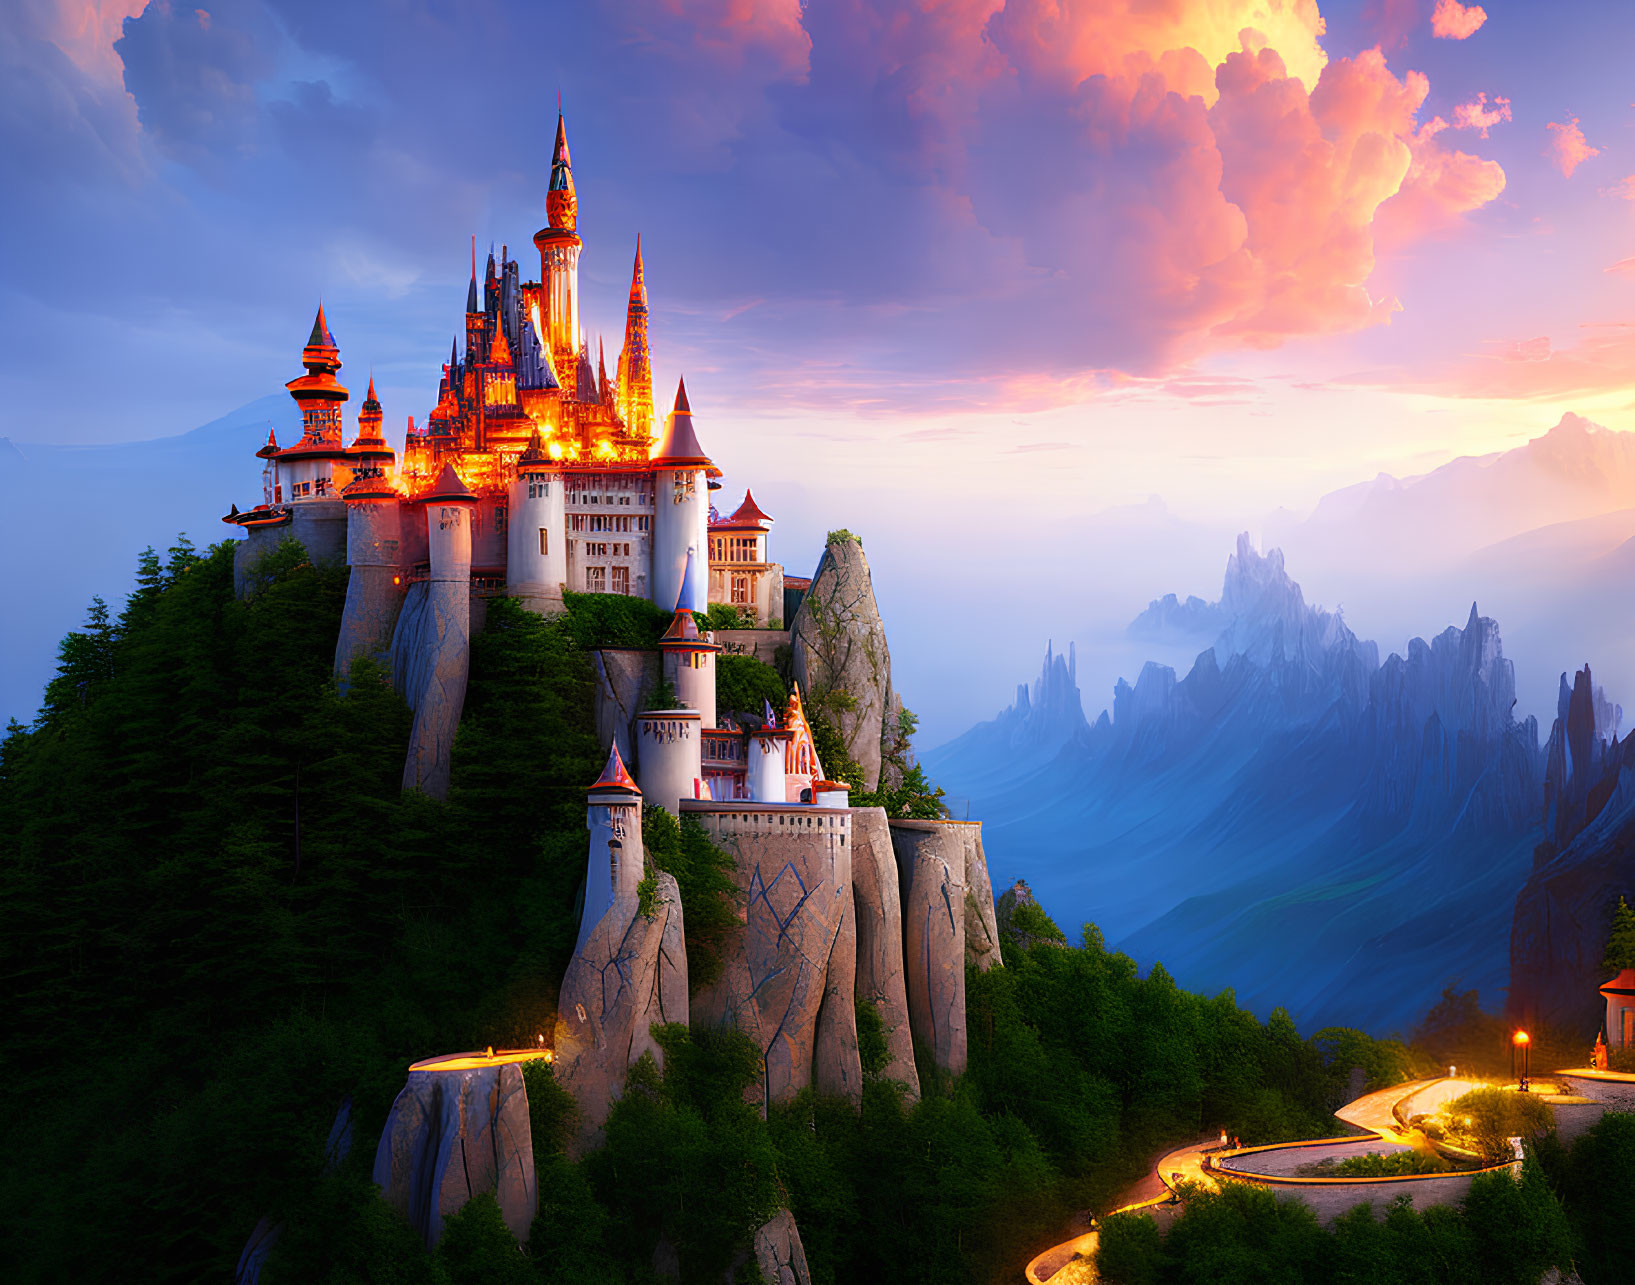 Illuminated fantasy castle on rugged cliffs at twilight